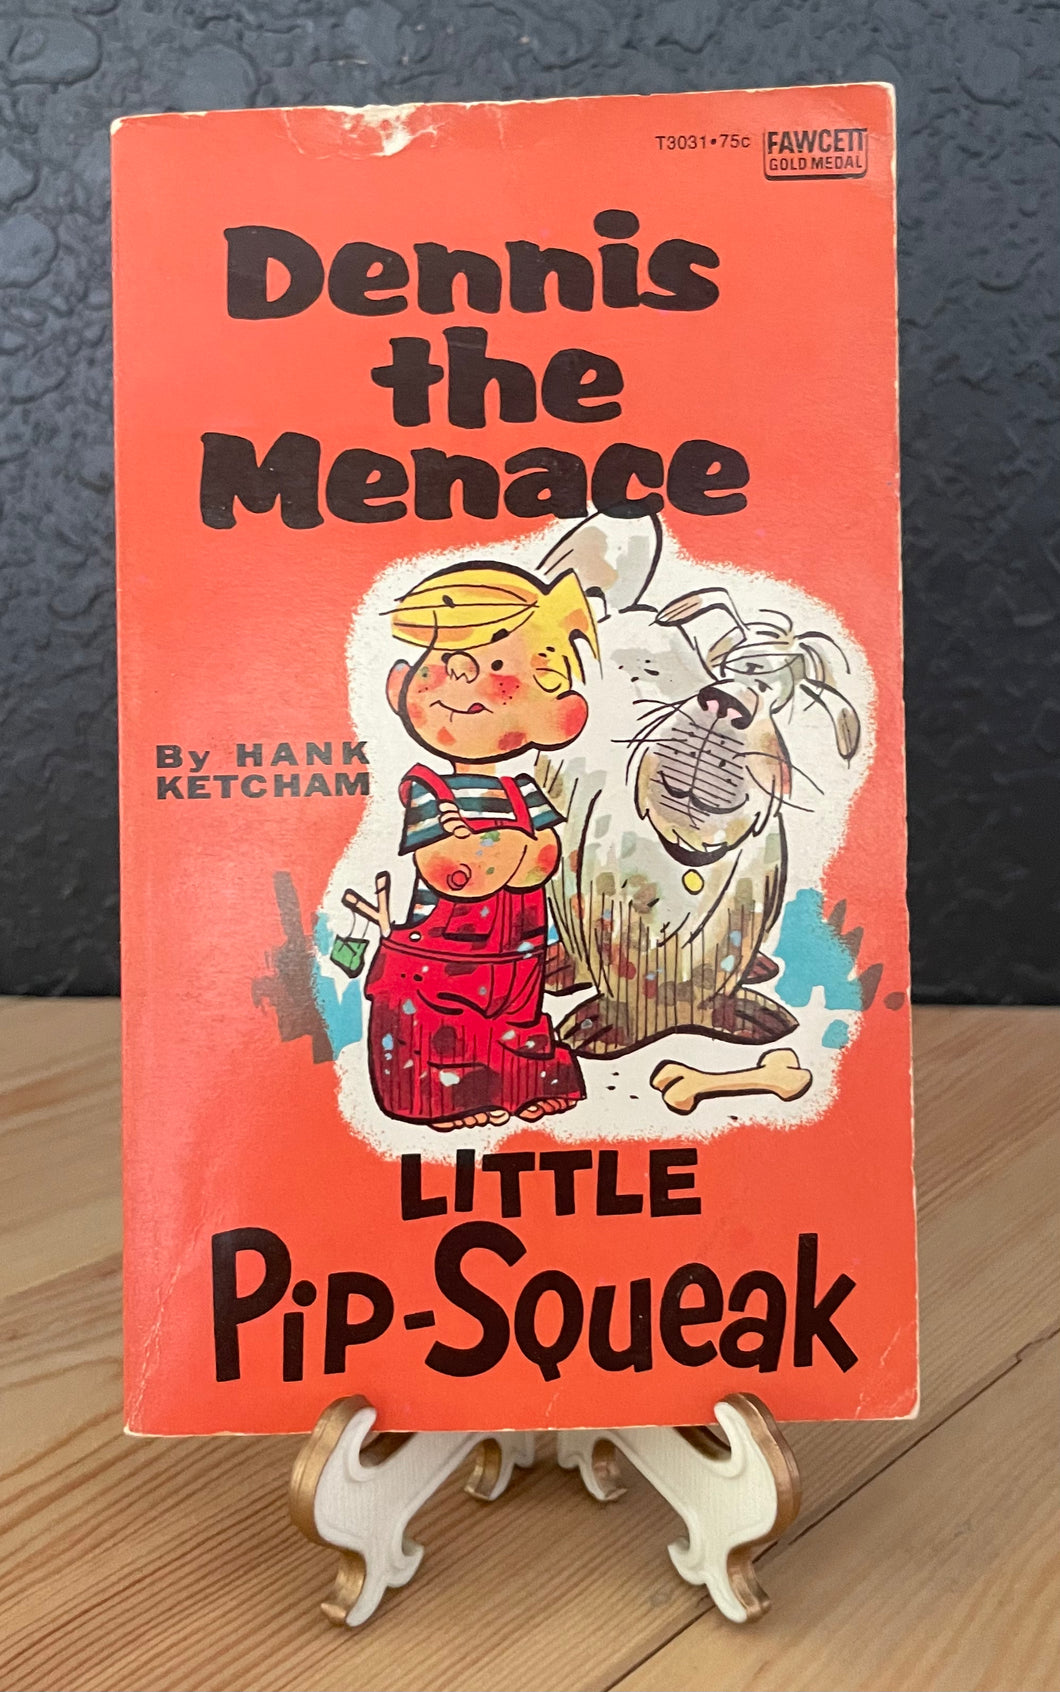 1974 “Dennis the Menace, Lil Pip Squeak” Vintage Paperback Book